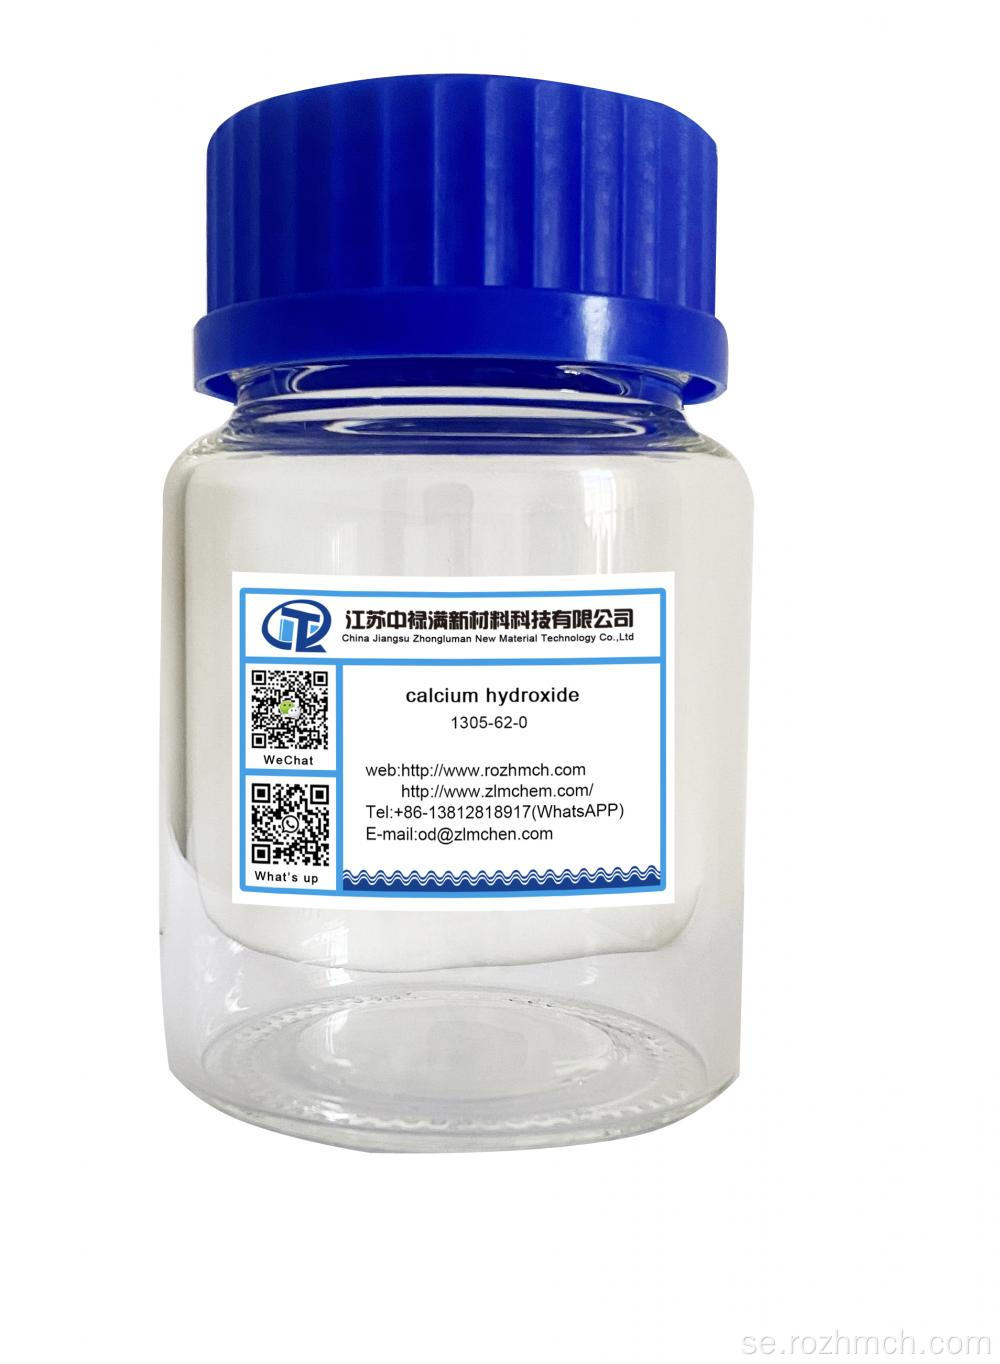 Kalciumhydroxid CAS nr 1305-62-0